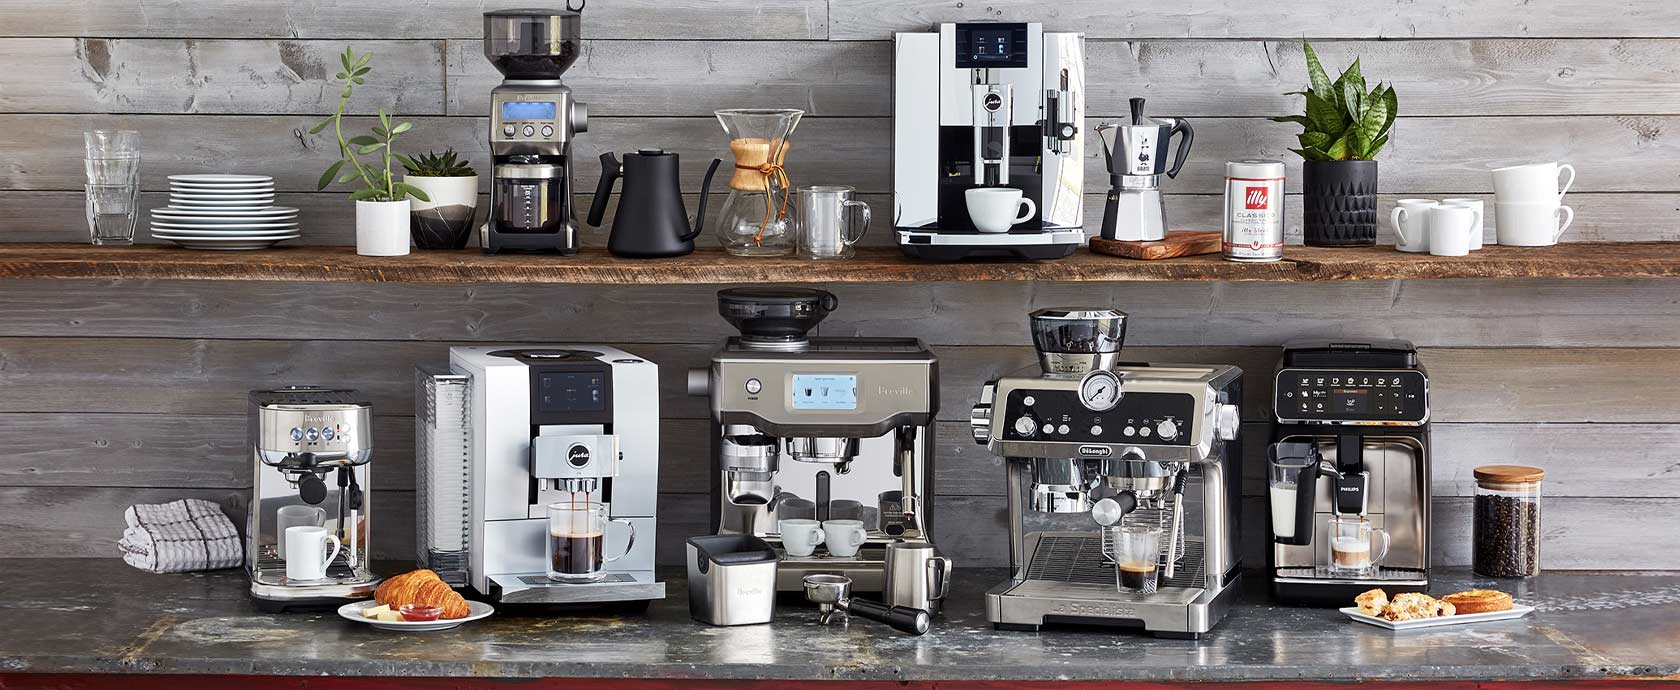 Coffee & Espresso machines on counter